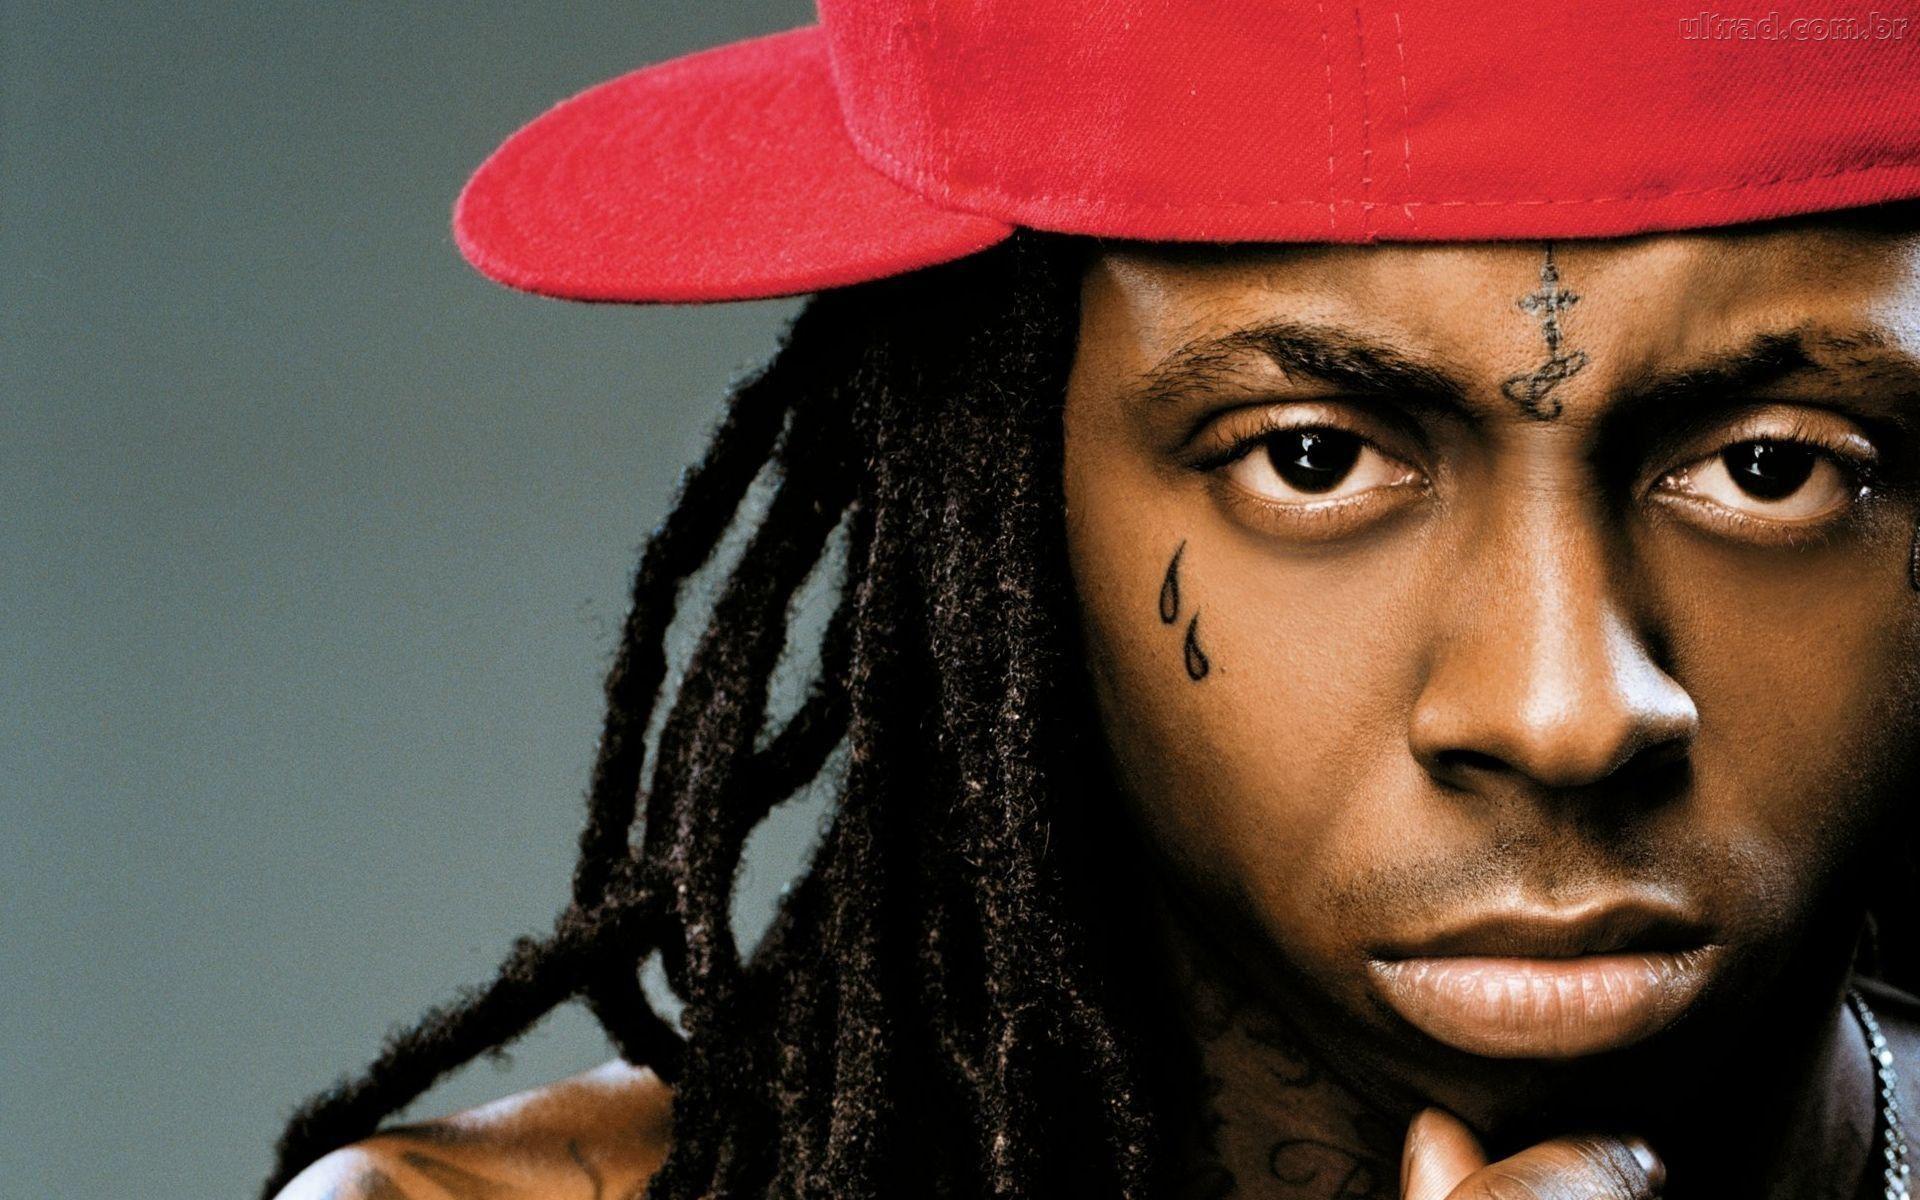 Lil Wayne wallpaper HD free wallpaper background image